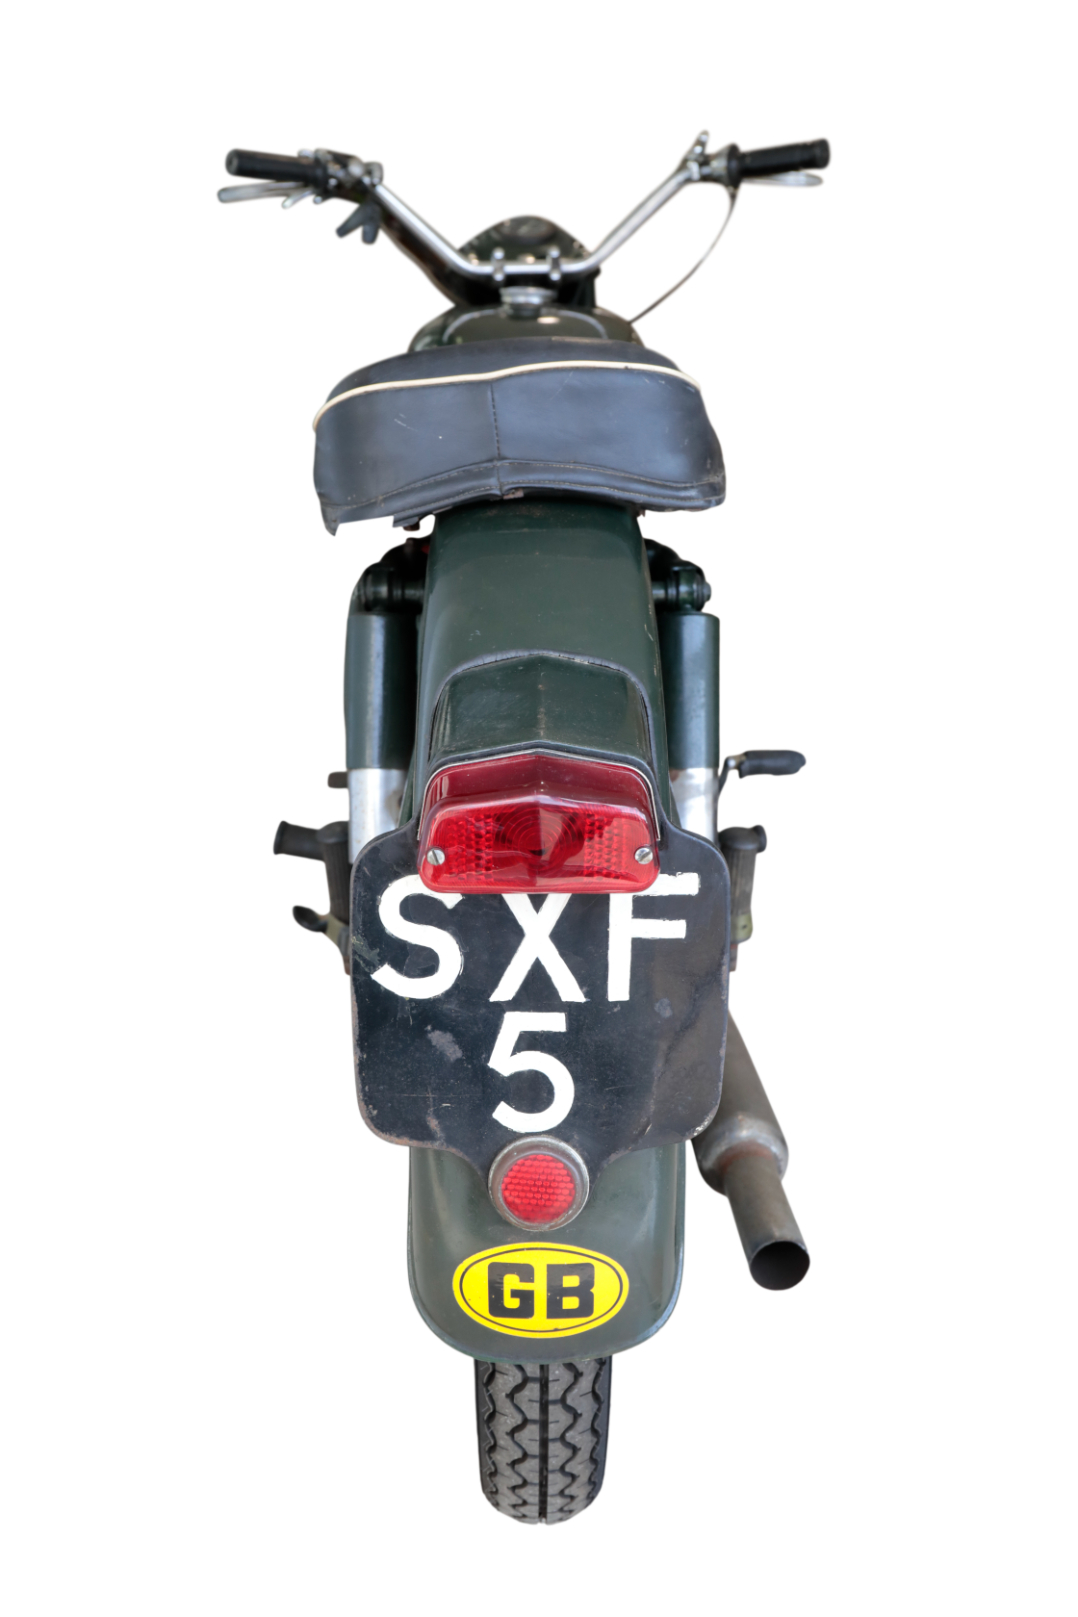 BSA MODEL B31 MOTORBIKE - Image 9 of 15